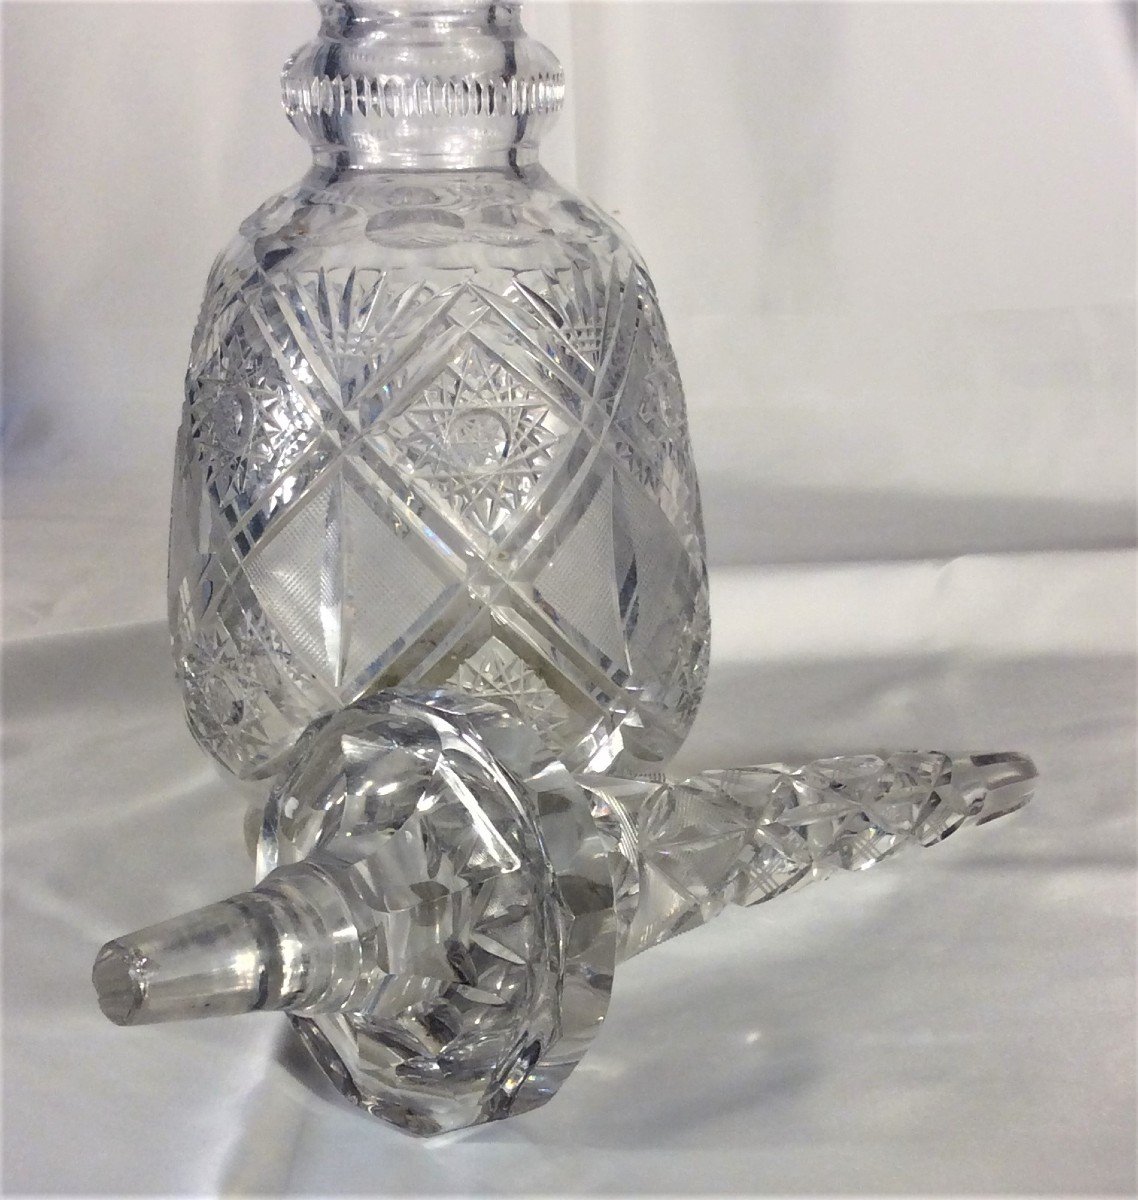   Imposing Crystal Bottle - 19th Century.-photo-4